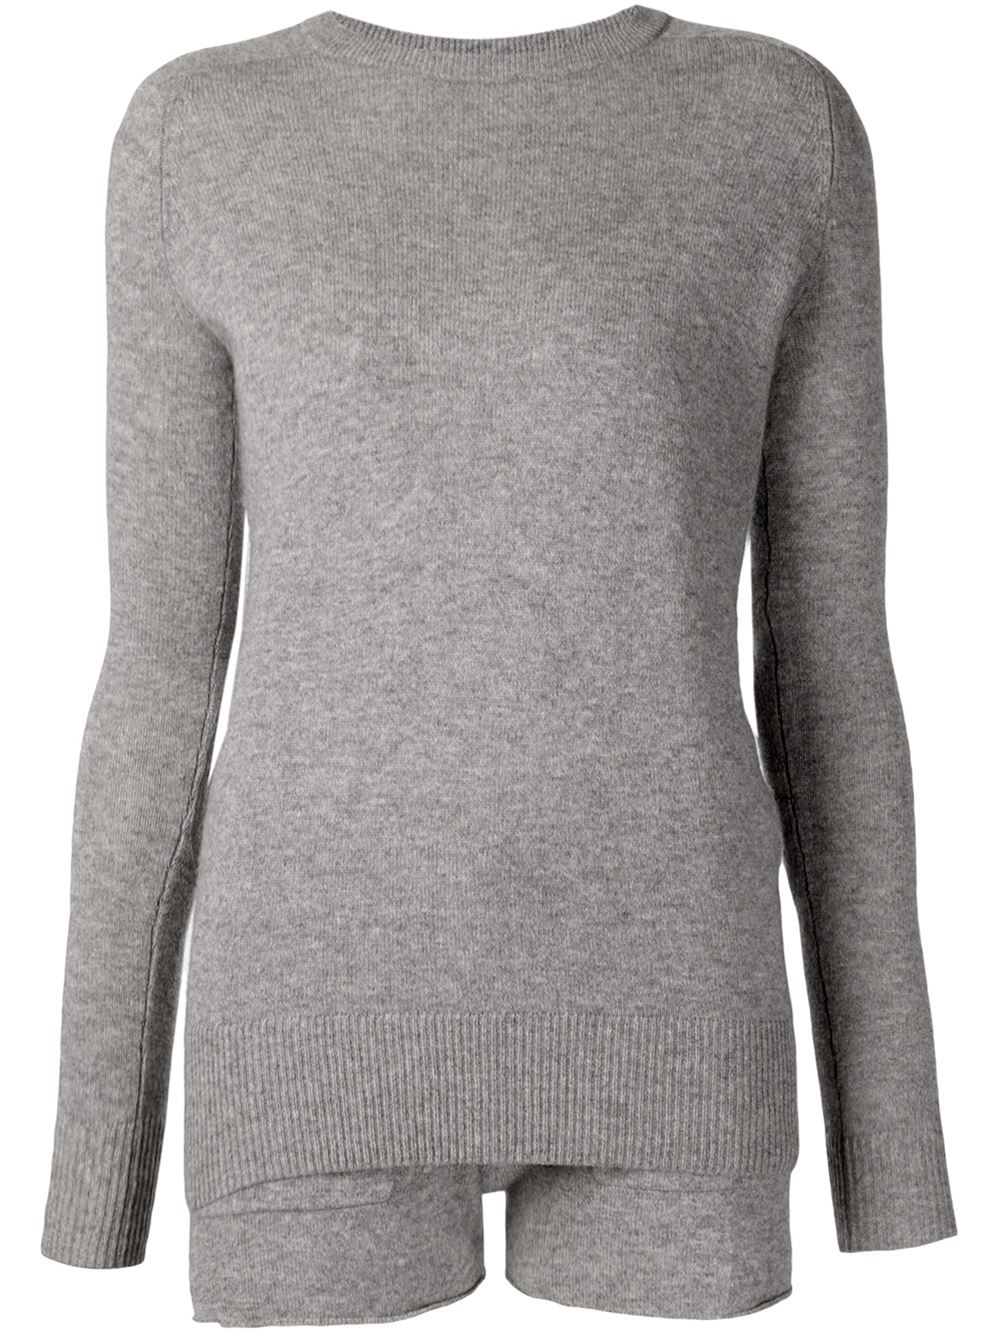 Nlst Crew Neck Sweater in Gray (grey) | Lyst